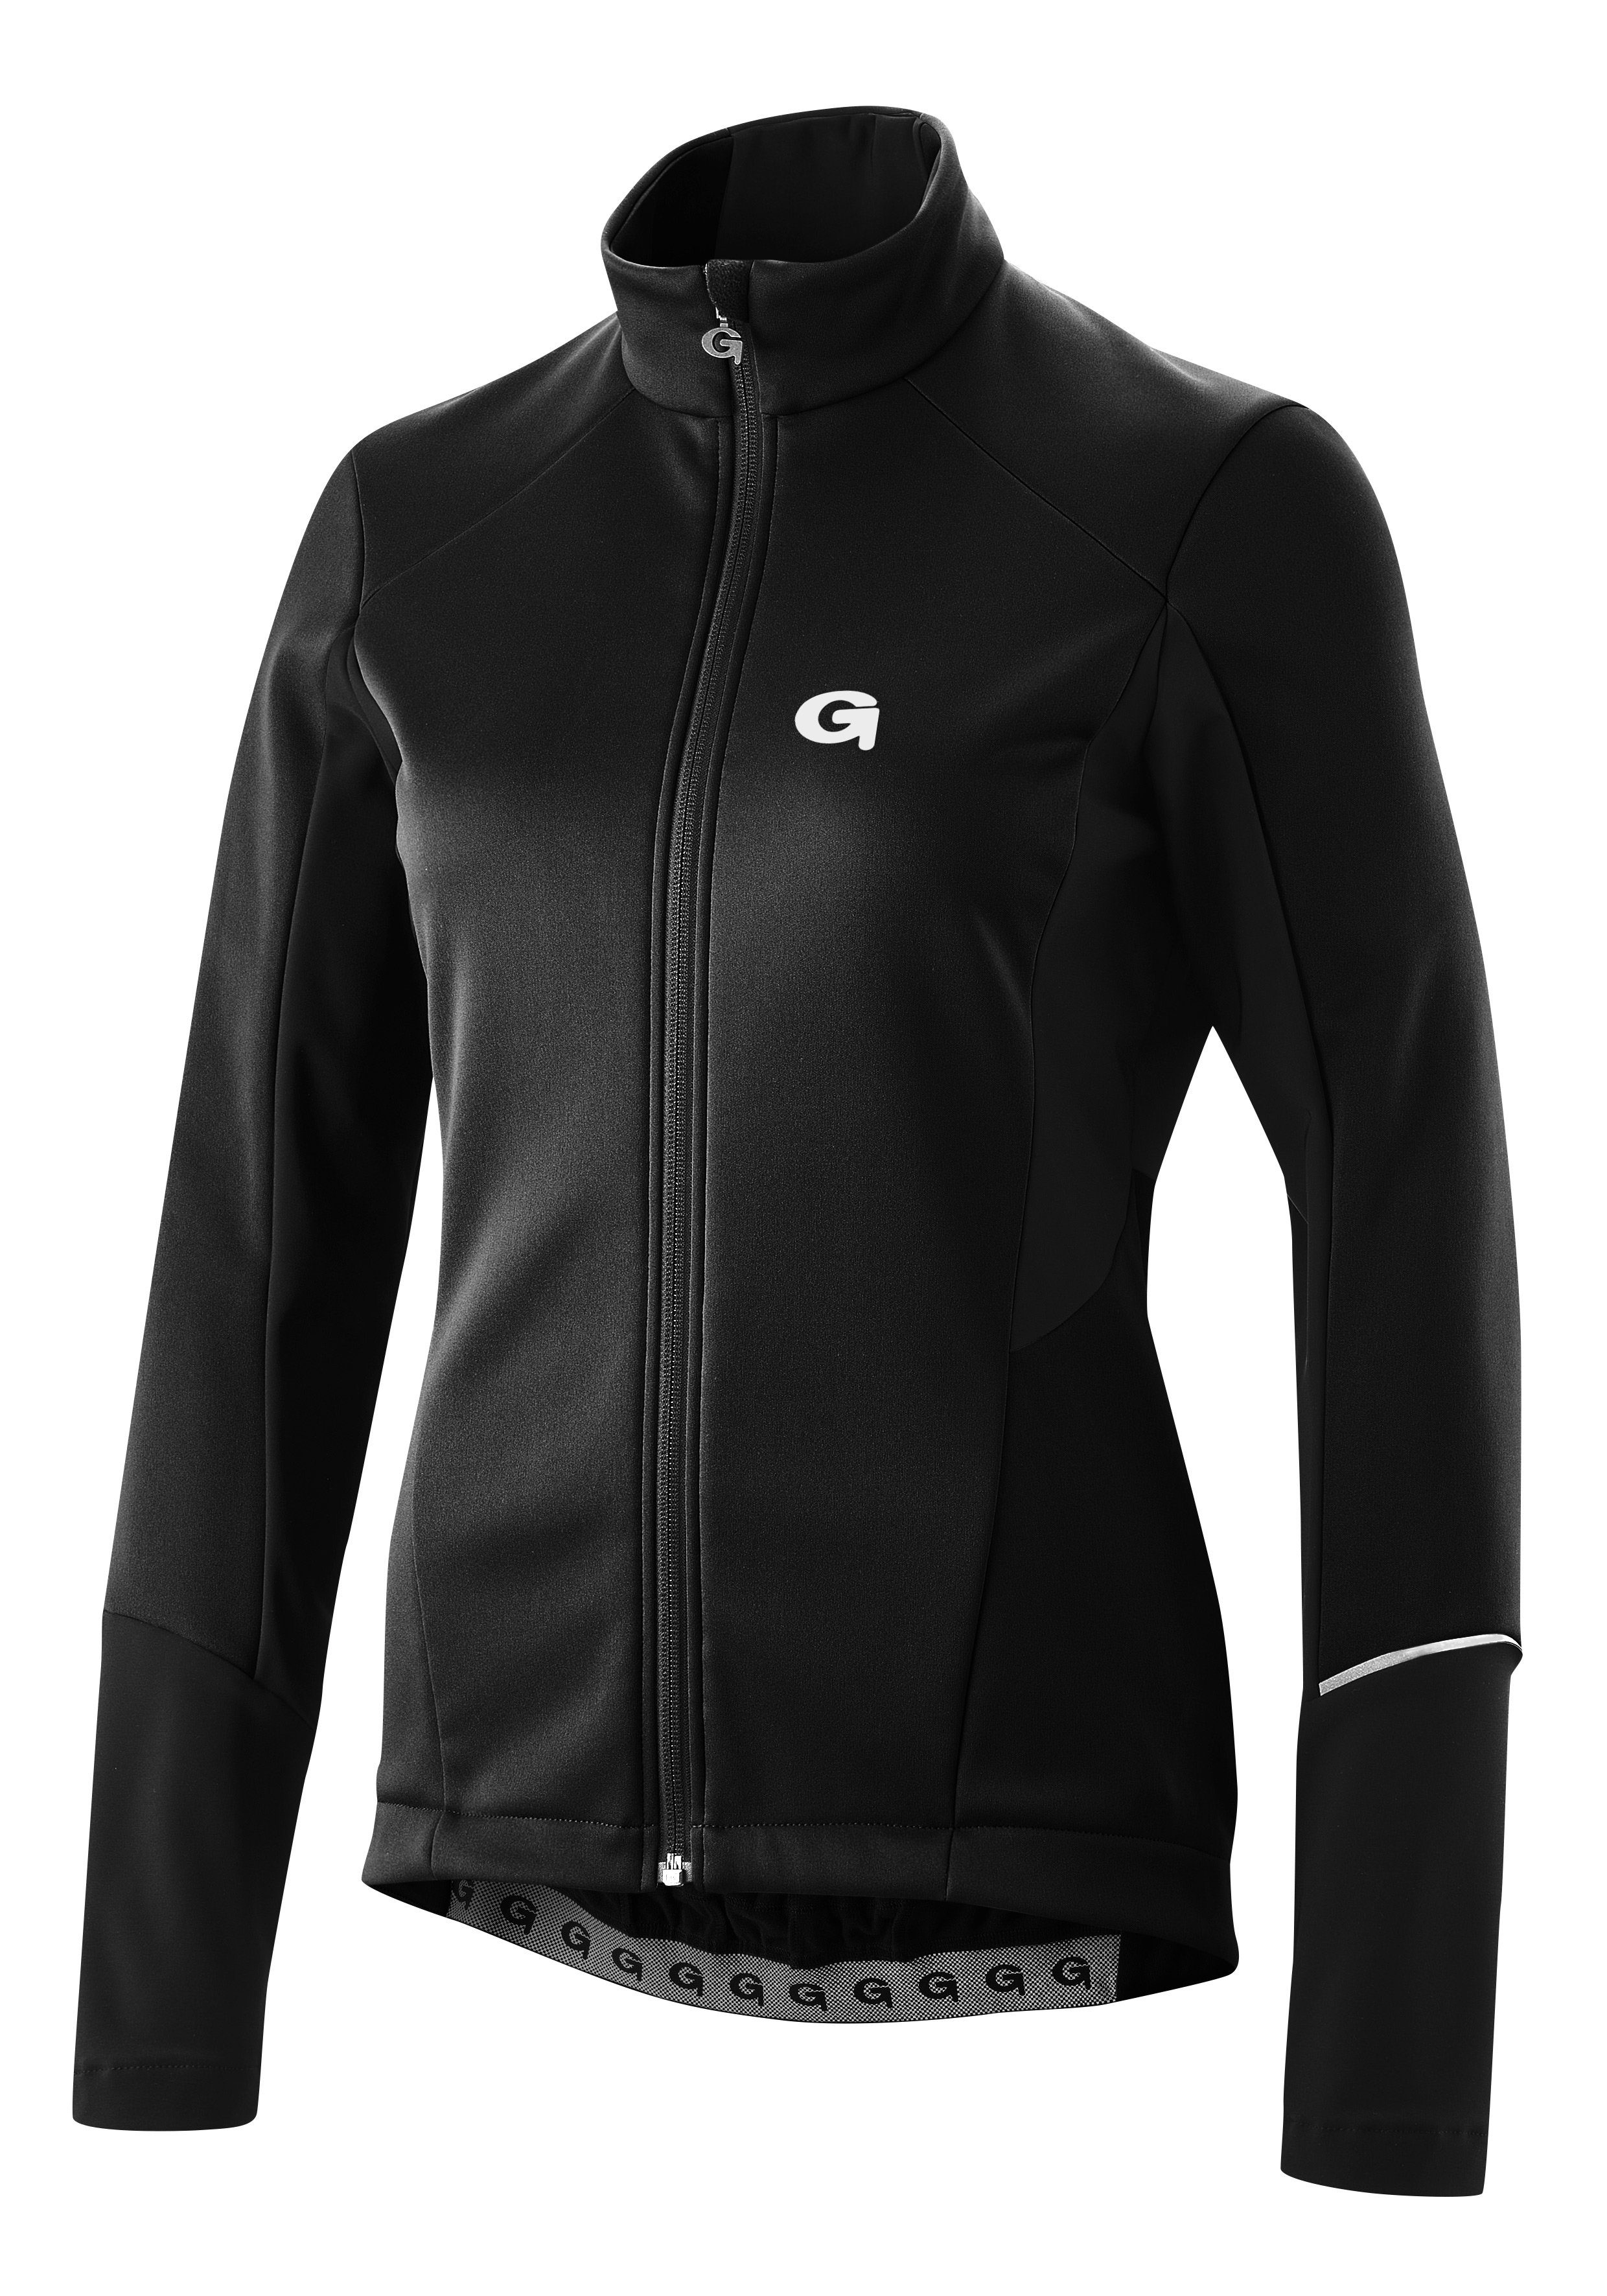 FURIANI Fahrradjacke Damen wasserabweisend Gonso und Windjacke Softshell-Jacke, schwarz atmungsaktiv